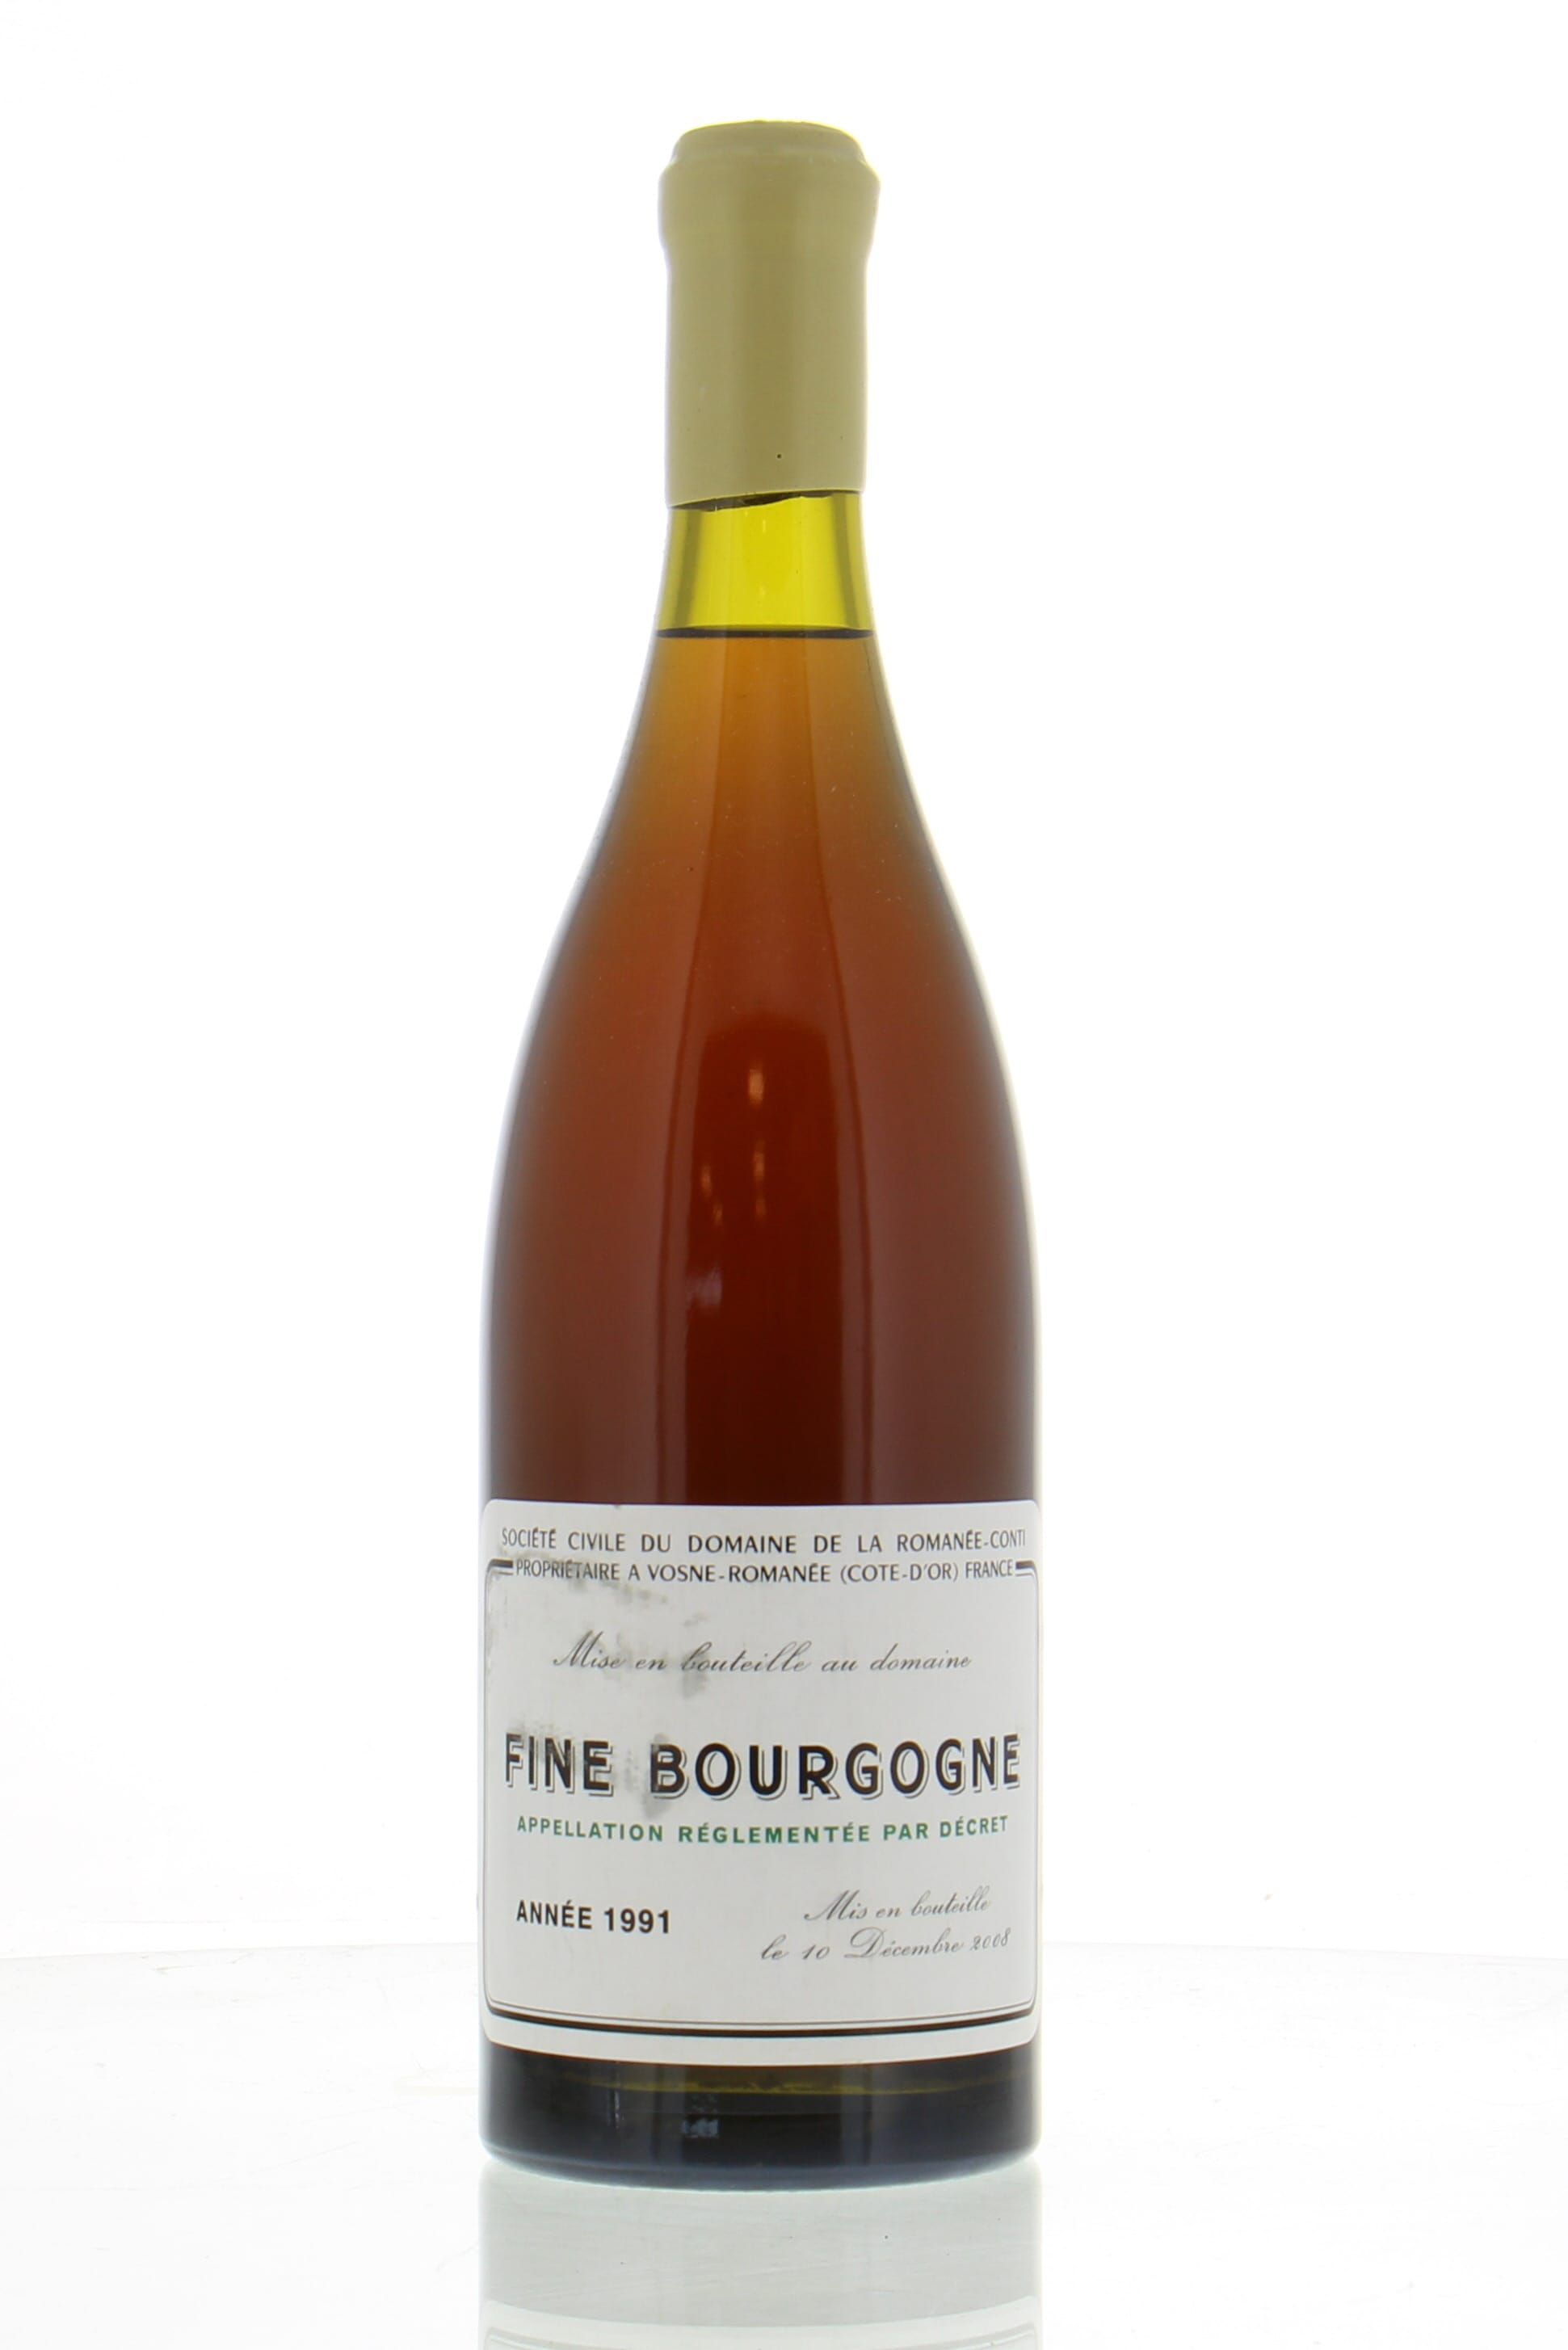 Domaine de la Romanee Conti - Fine de Bourgogne 1991 Perfect